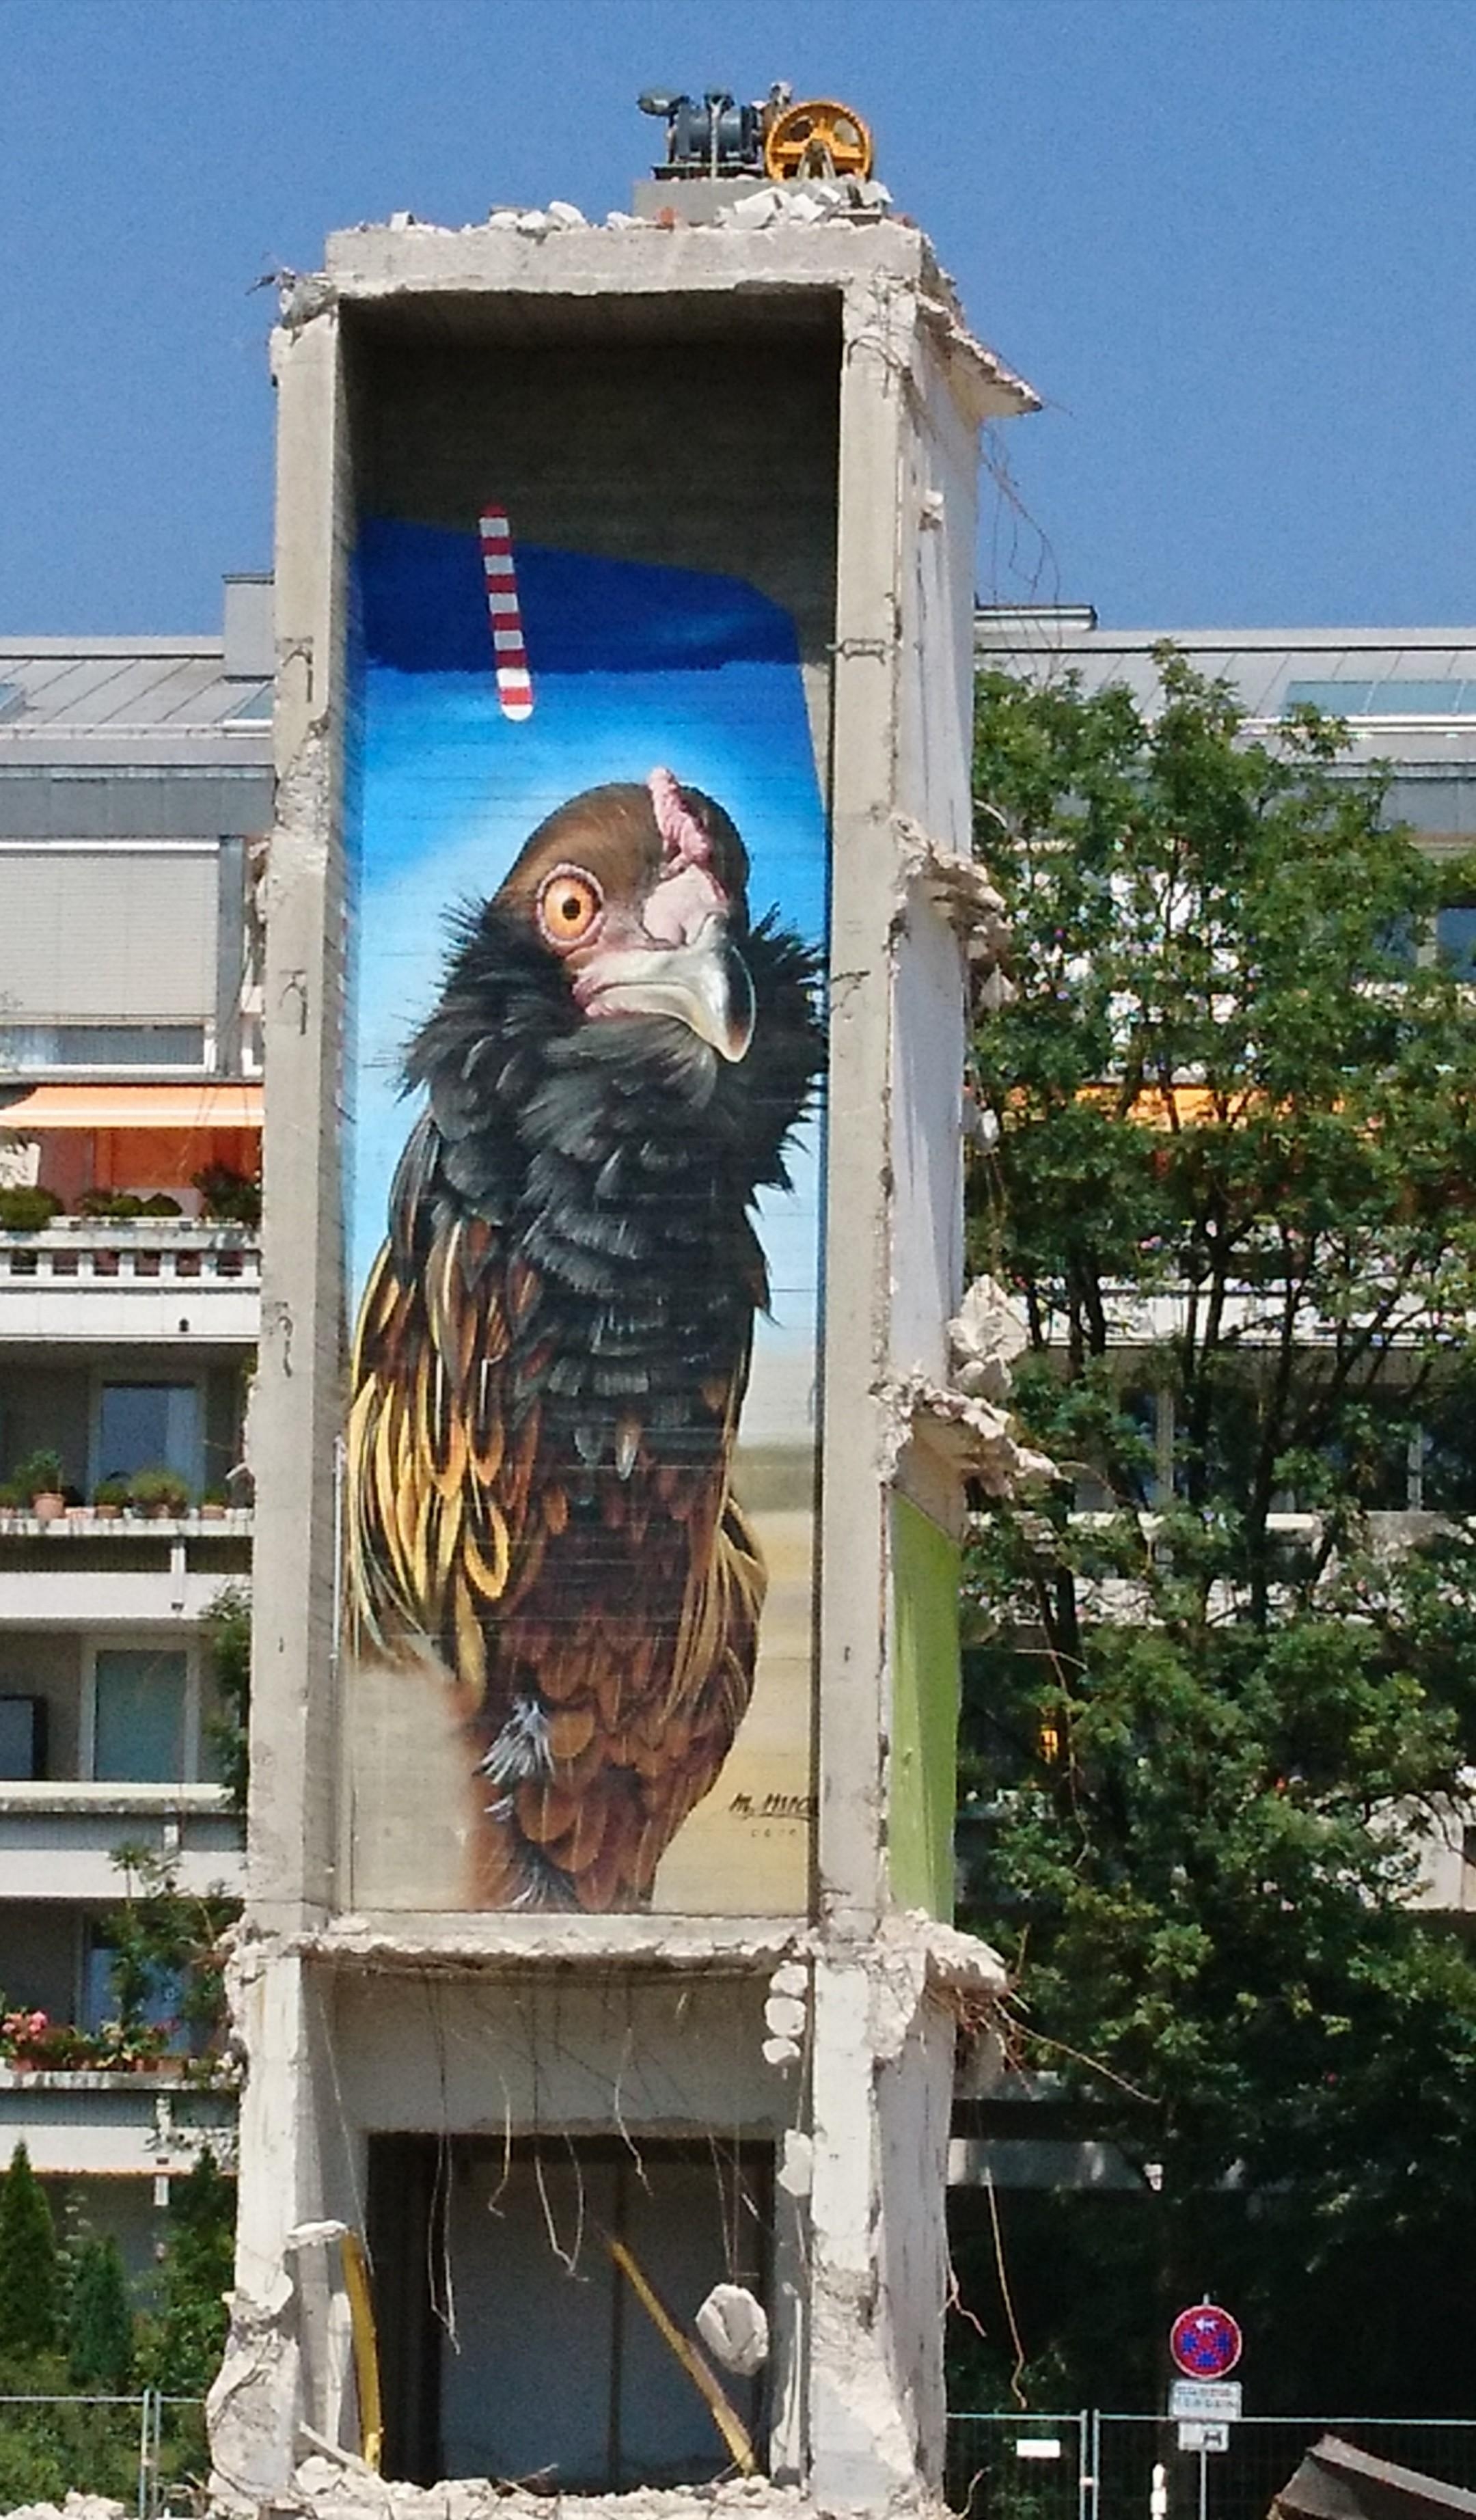 München schafft Platz 2.0... 👷‍♀️
#münchen #city #living #heimatentdecken #stadt #streetart